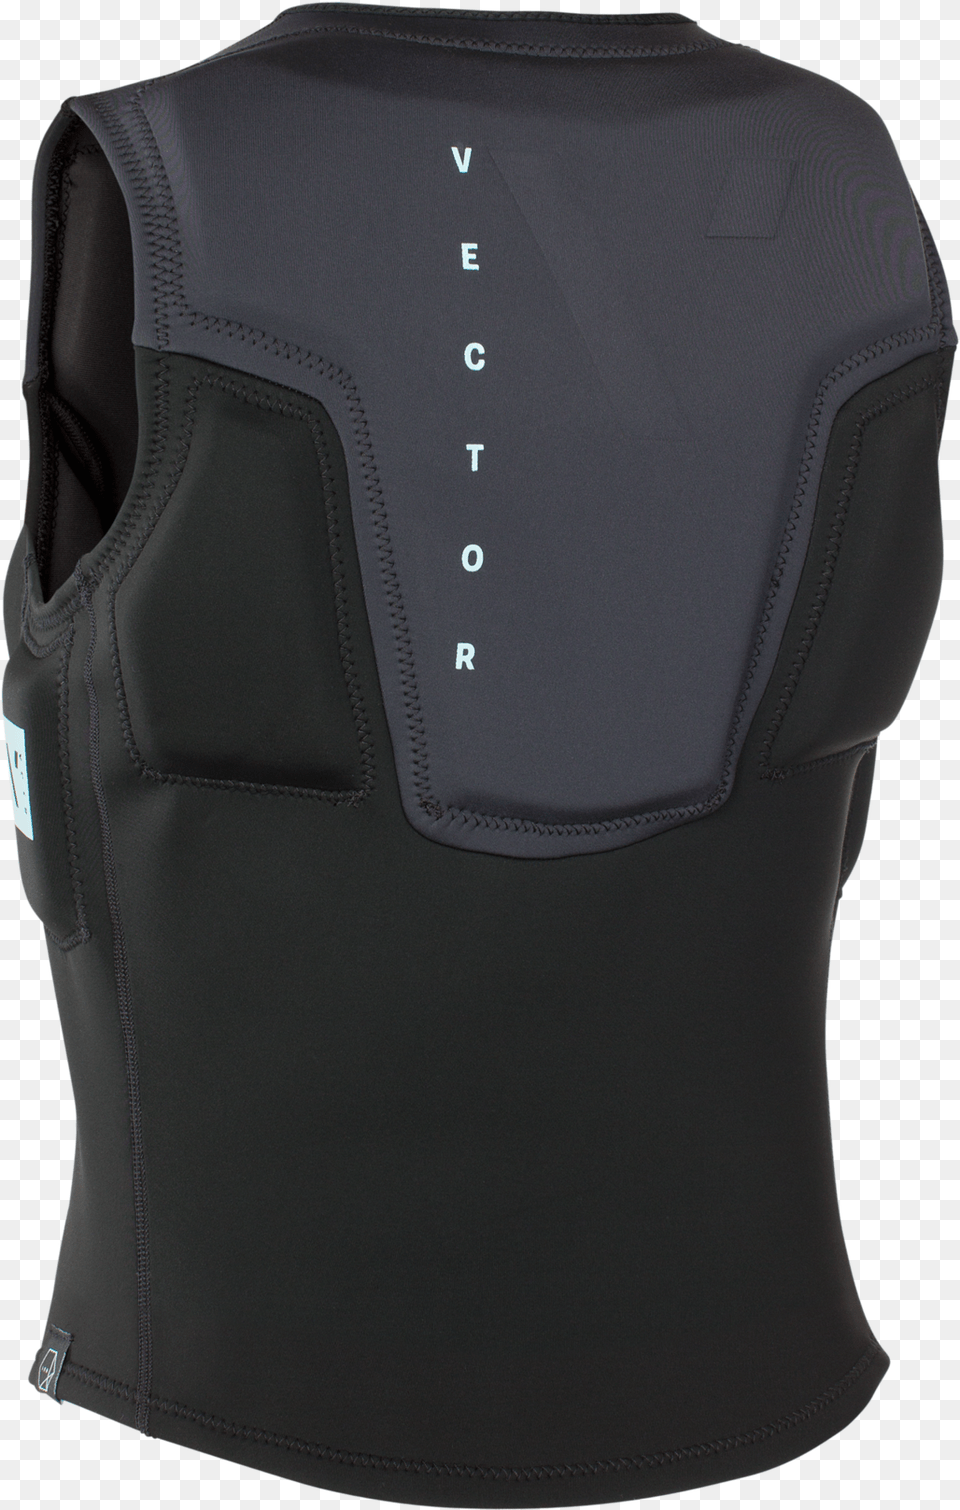 2019 Ion Vector Vest Amp Fzclass Lazyload Lazyload Vest, Clothing, Lifejacket, Accessories, Bag Png Image